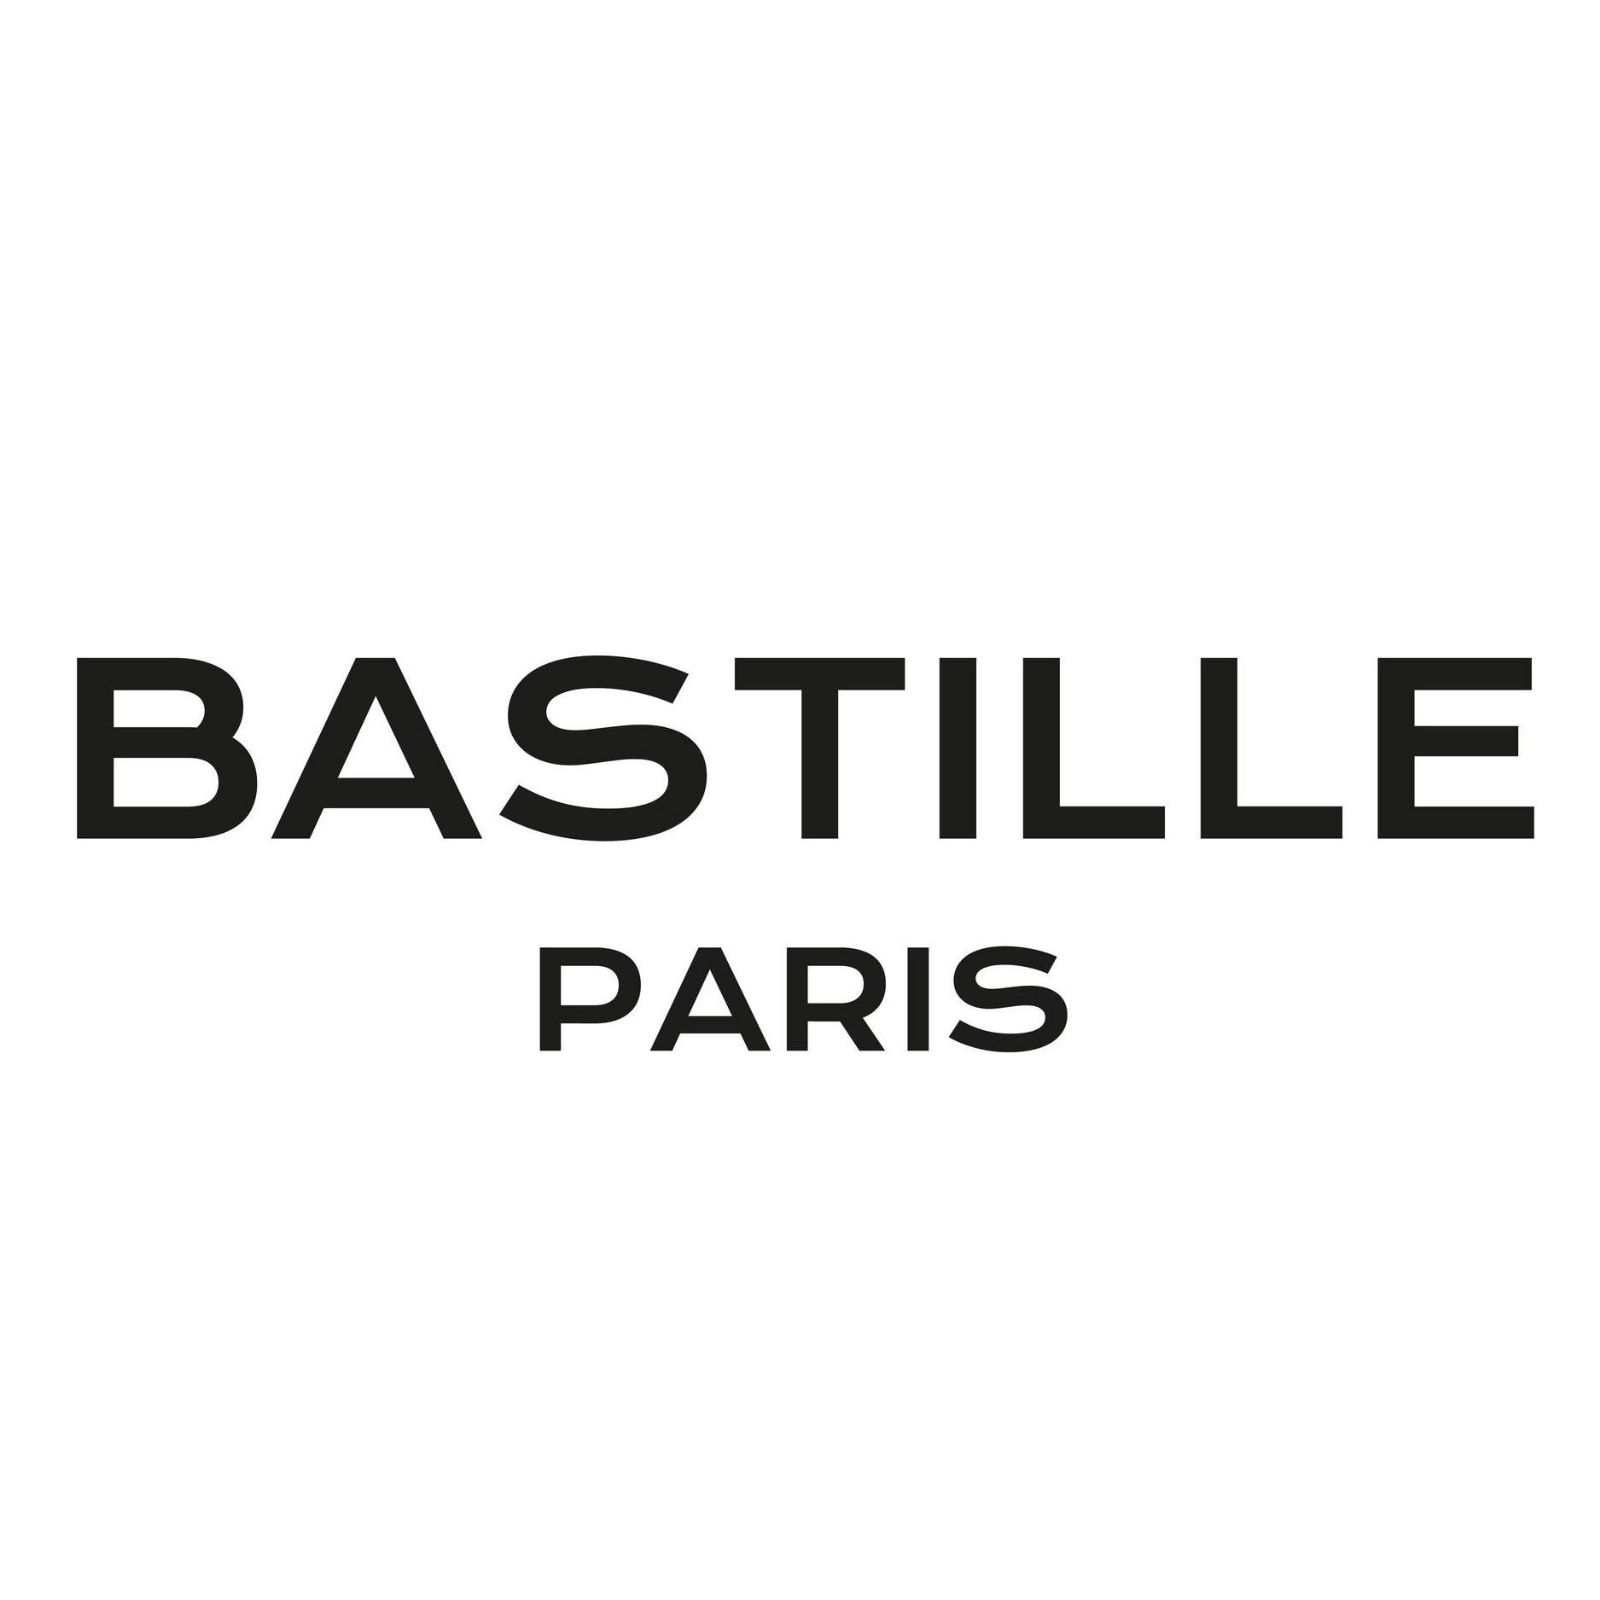 Bastille Paris